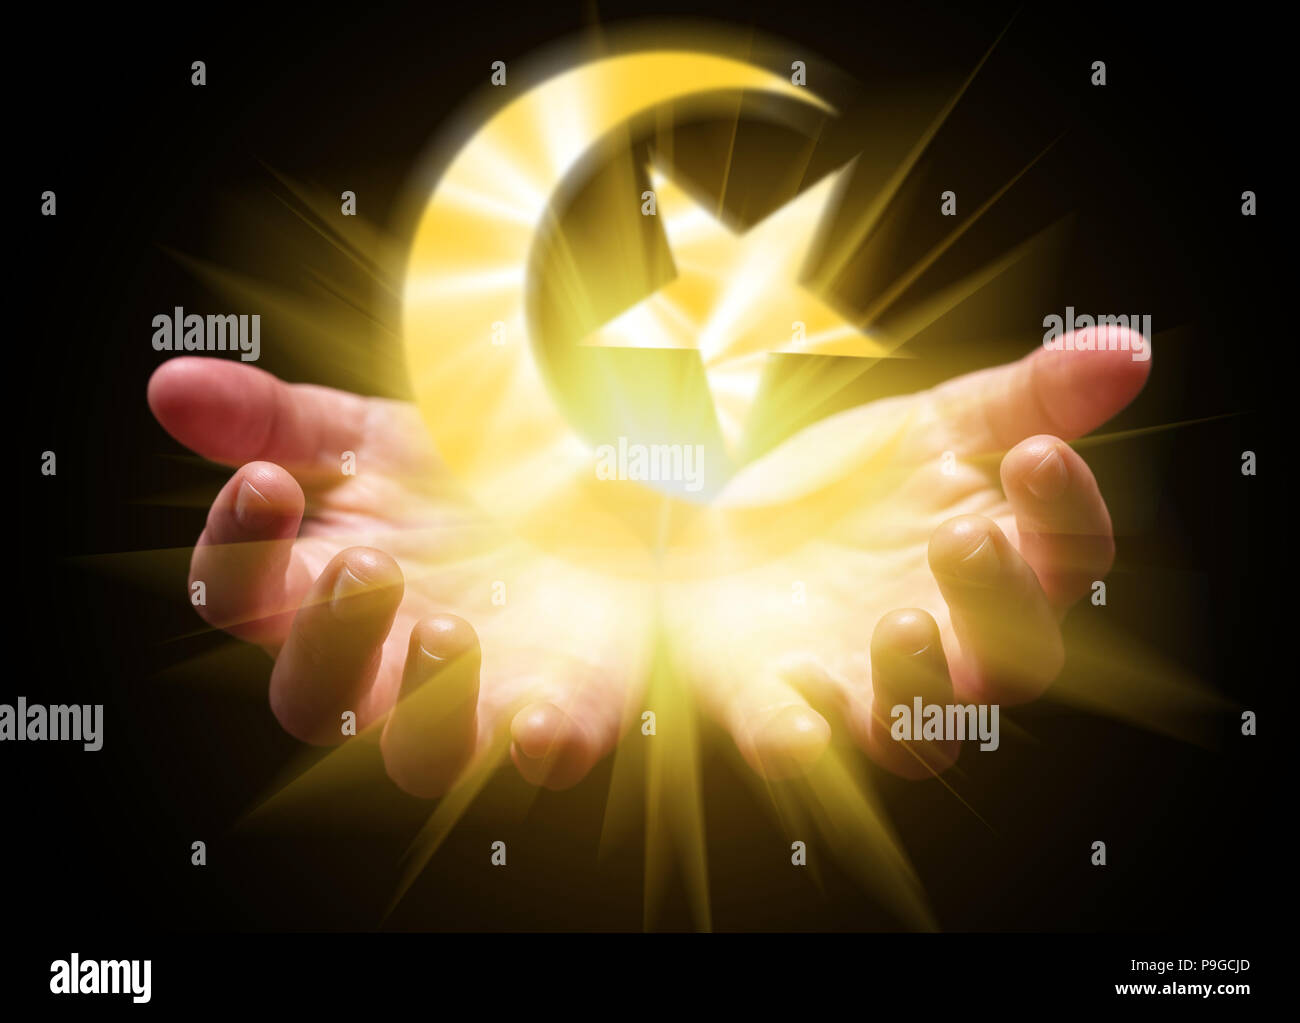 Islam star crescent moon -Fotos und -Bildmaterial in hoher Auflösung – Alamy